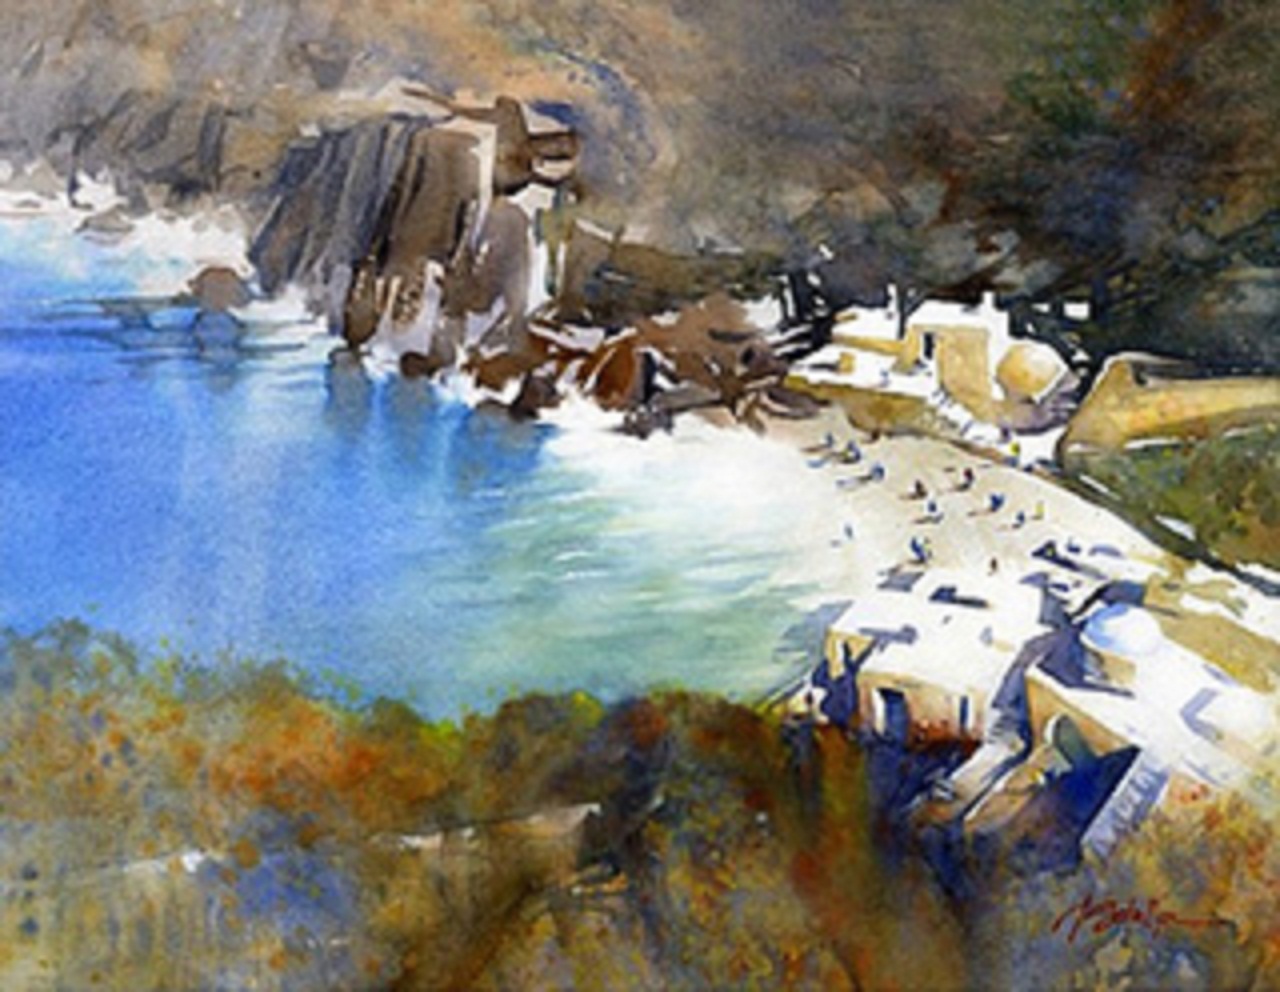 "Swimming cove - Greece" © Thomas W. Schaller www.thomasschaller.com